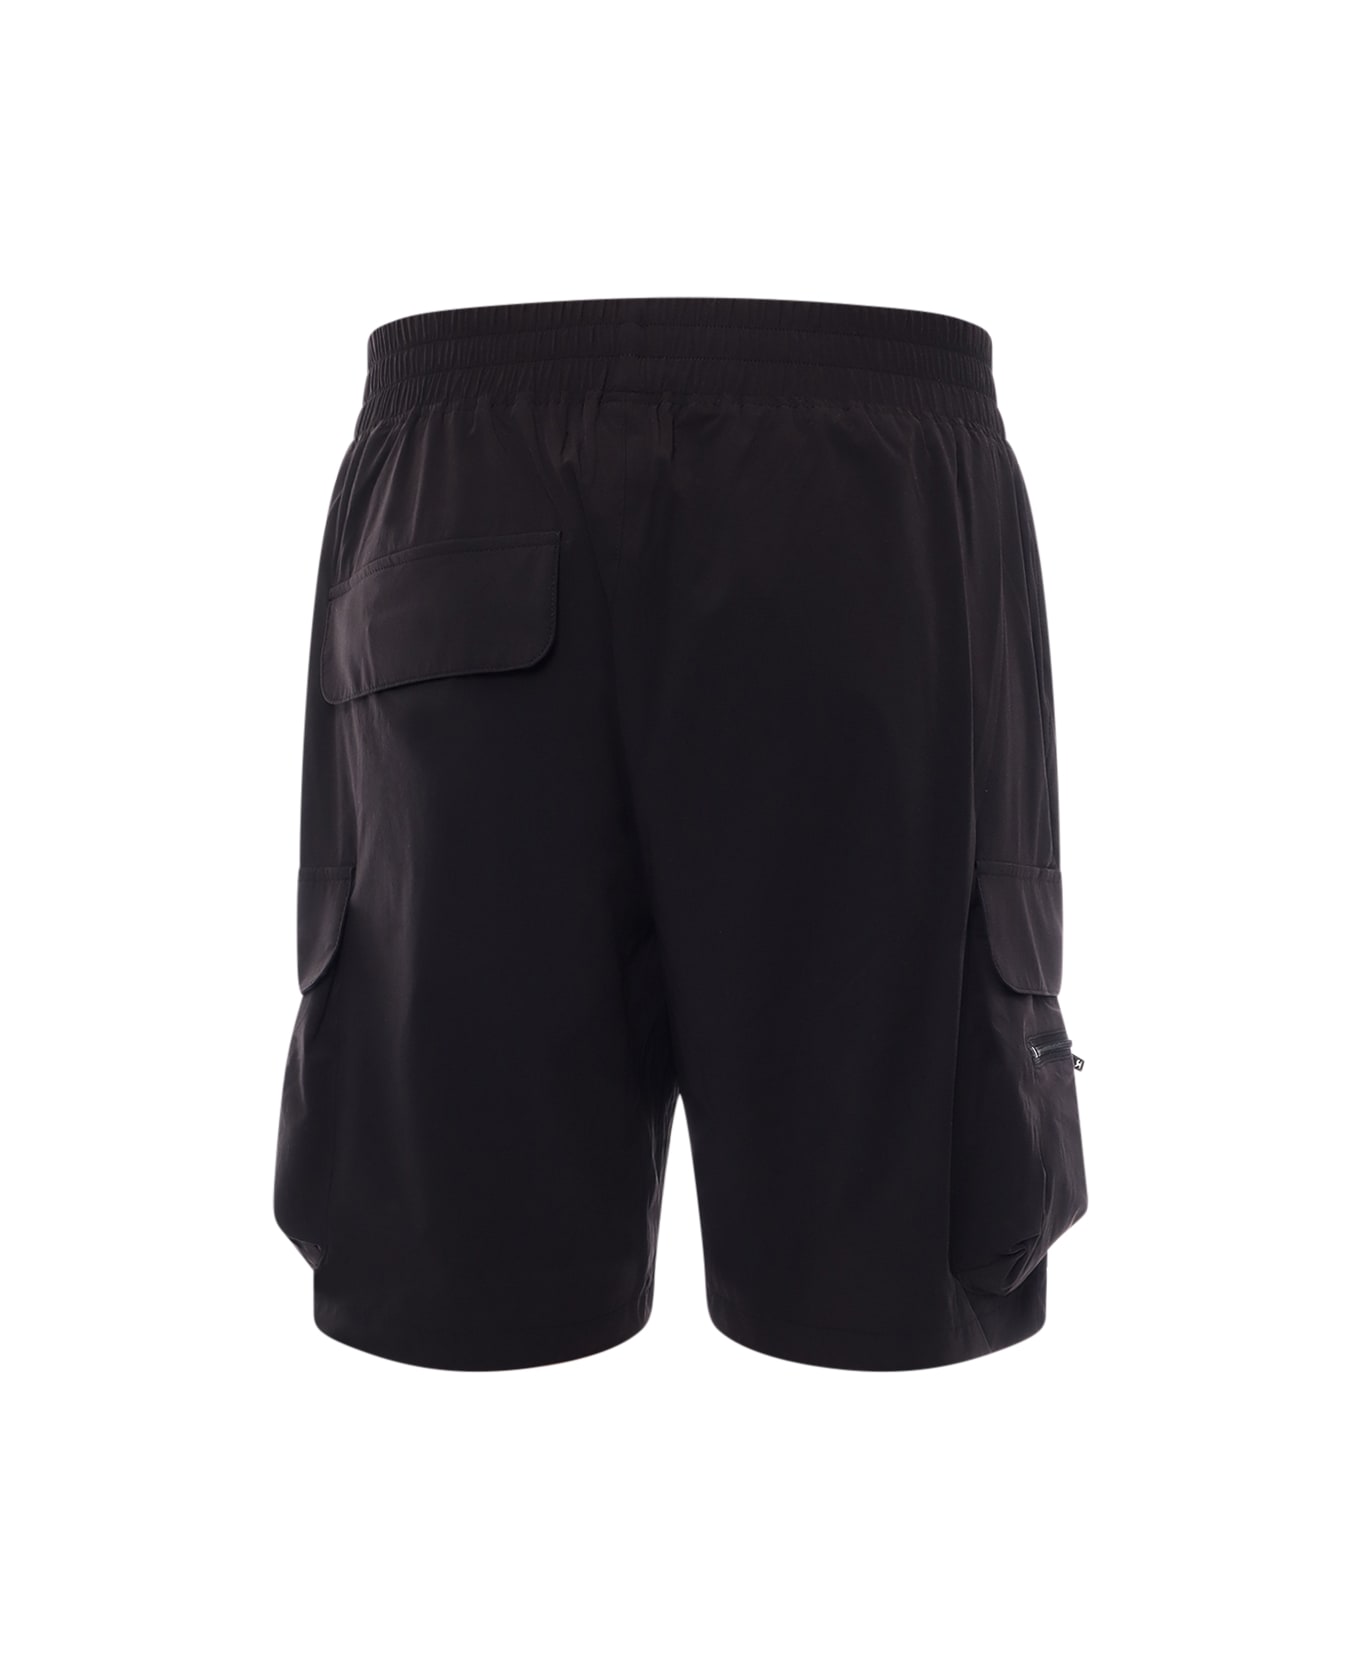 REPRESENT Bermuda Shorts - Black